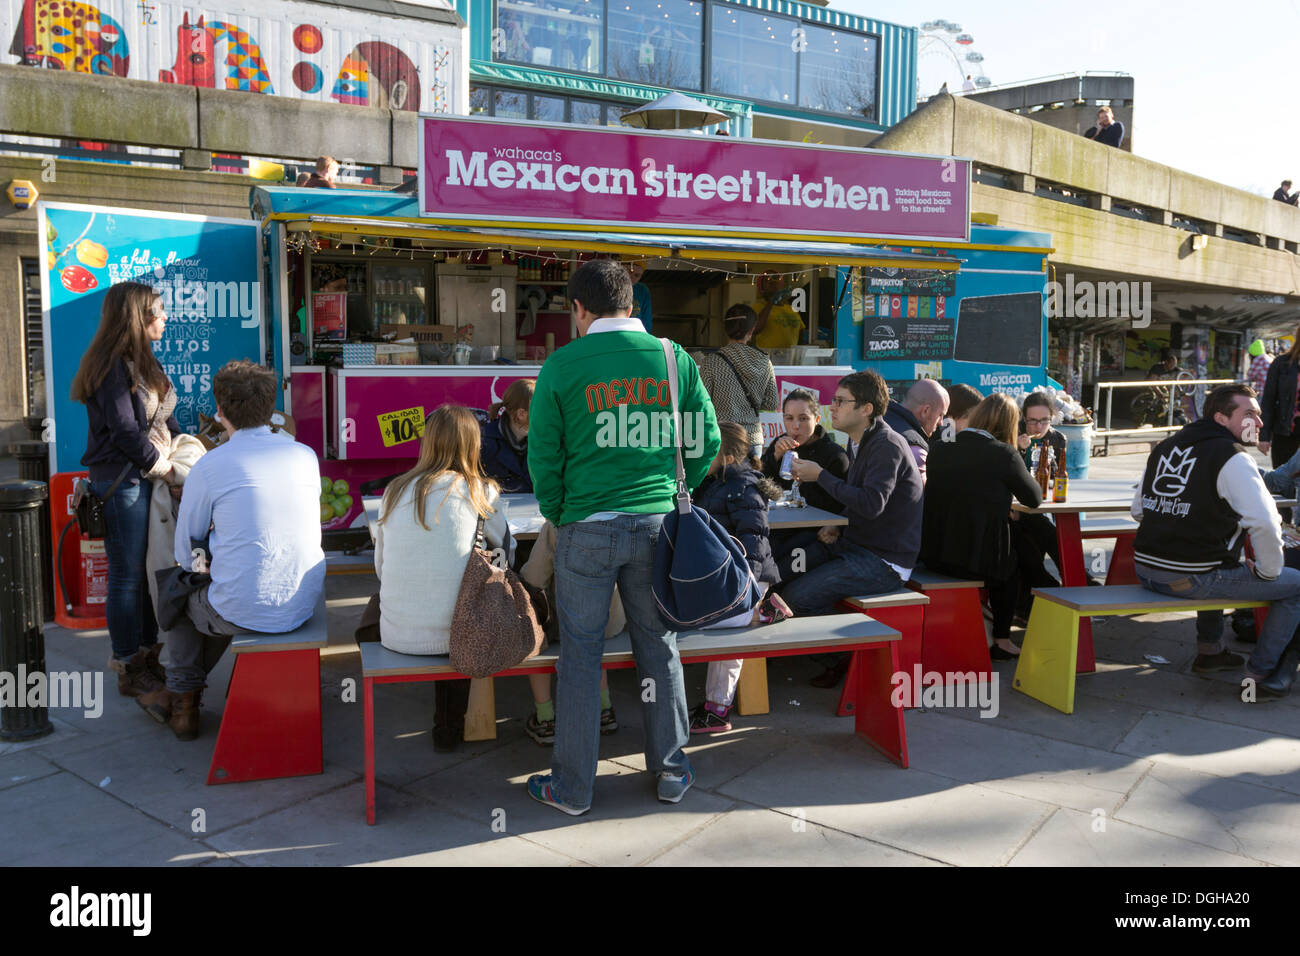 Mexican Street Kitchen - South Bank - London Stock Photo